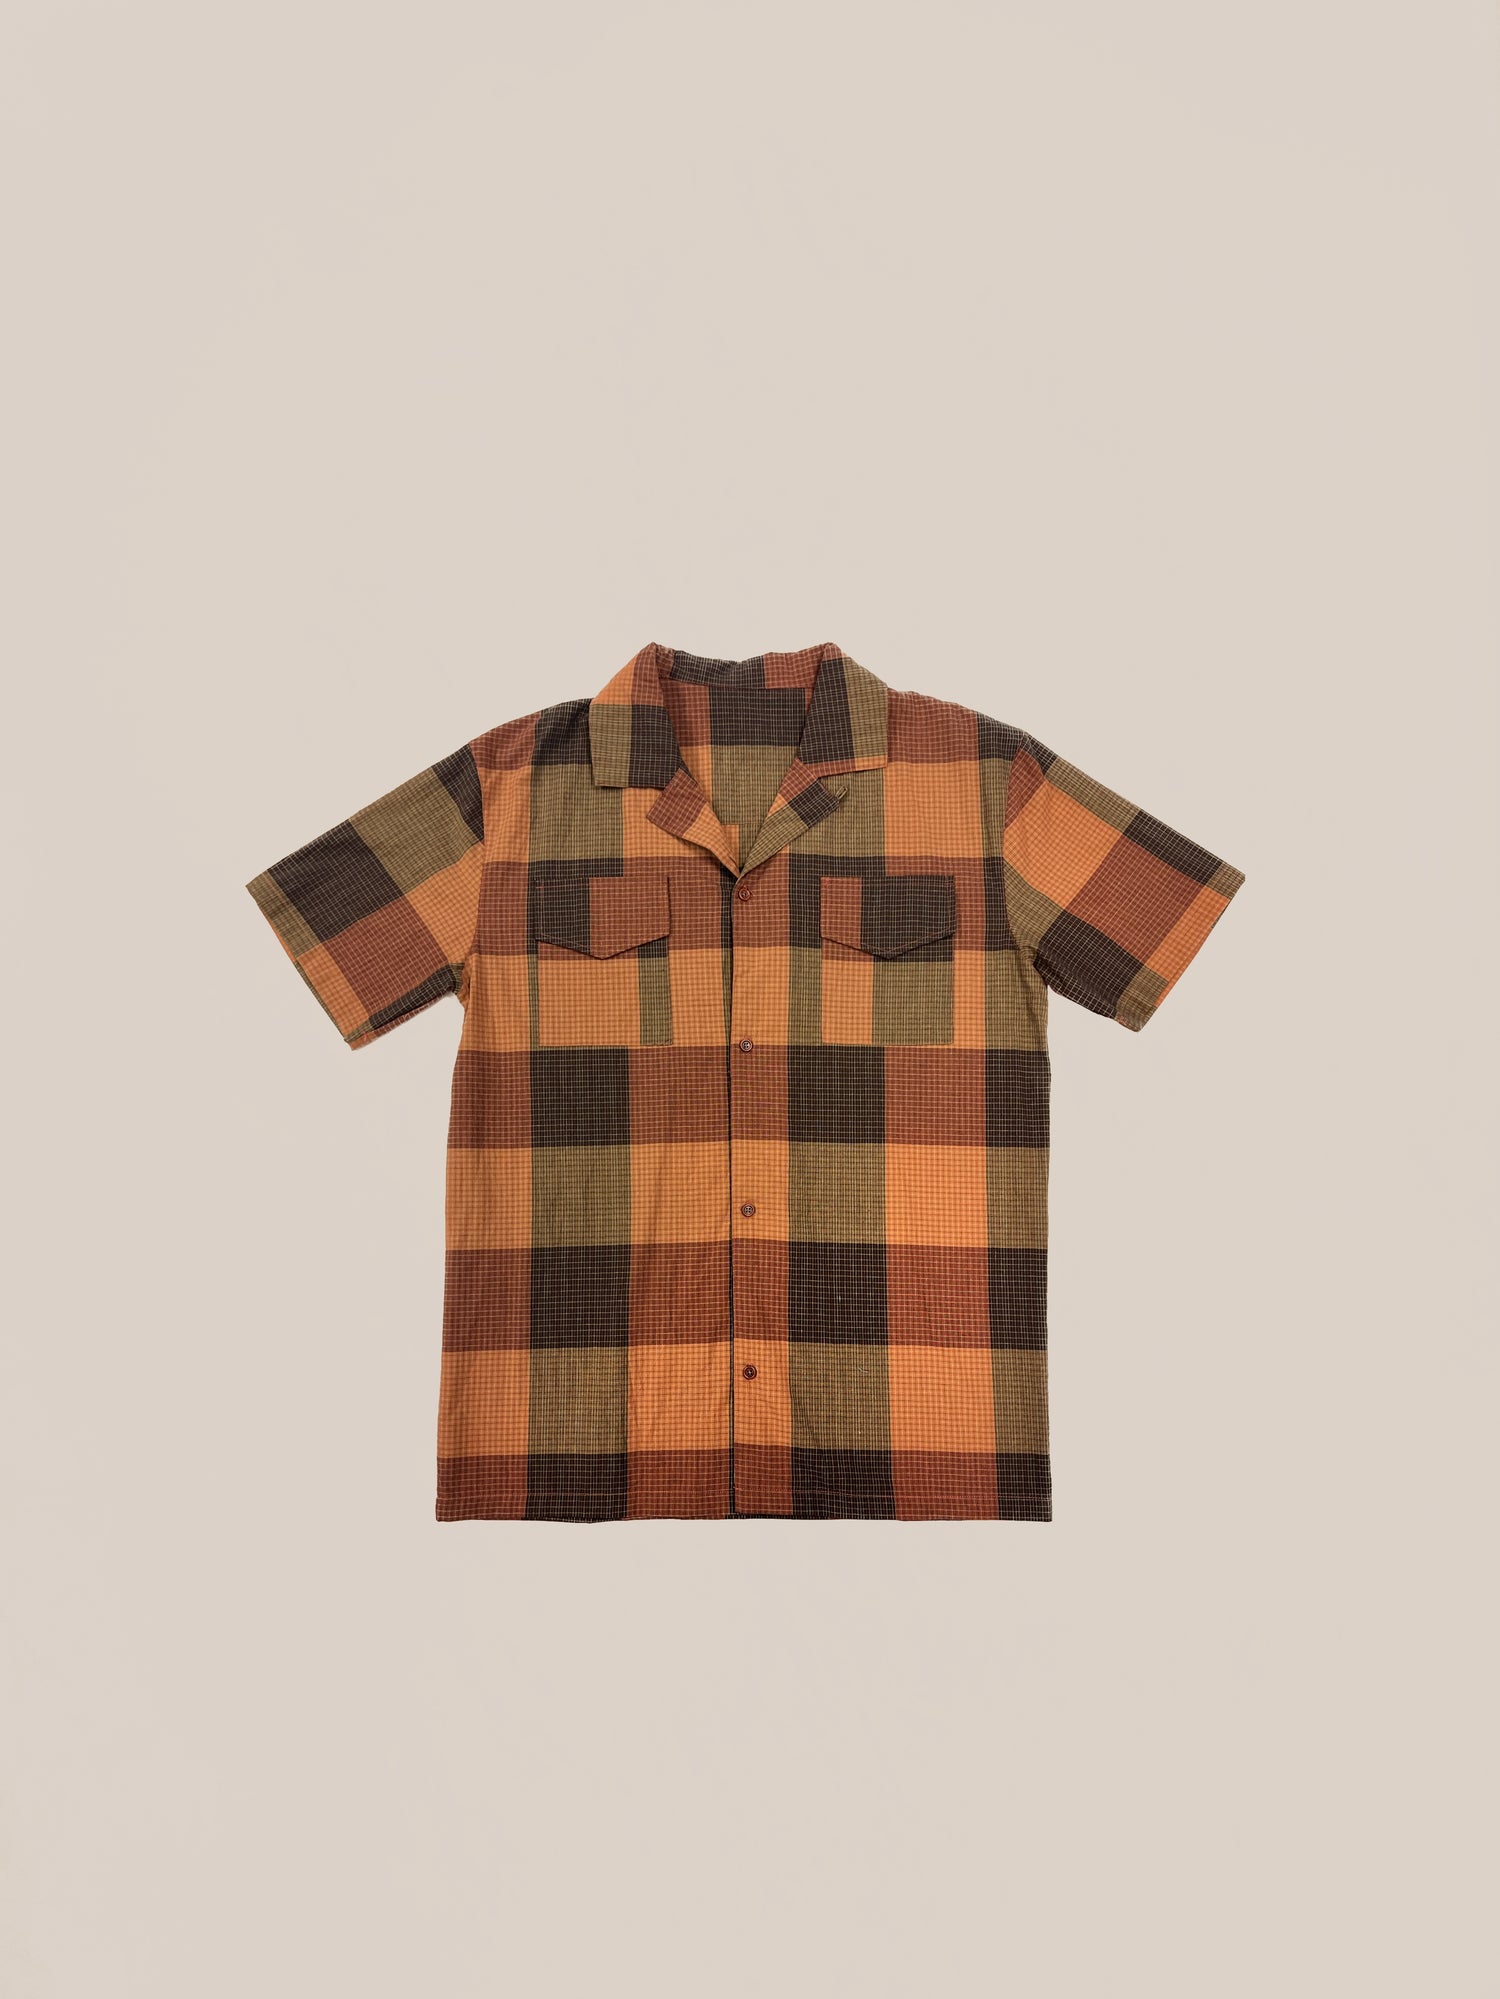 Profound's Sample 50 (Orange Plaid Camp Shirt) displayed on a neutral background.